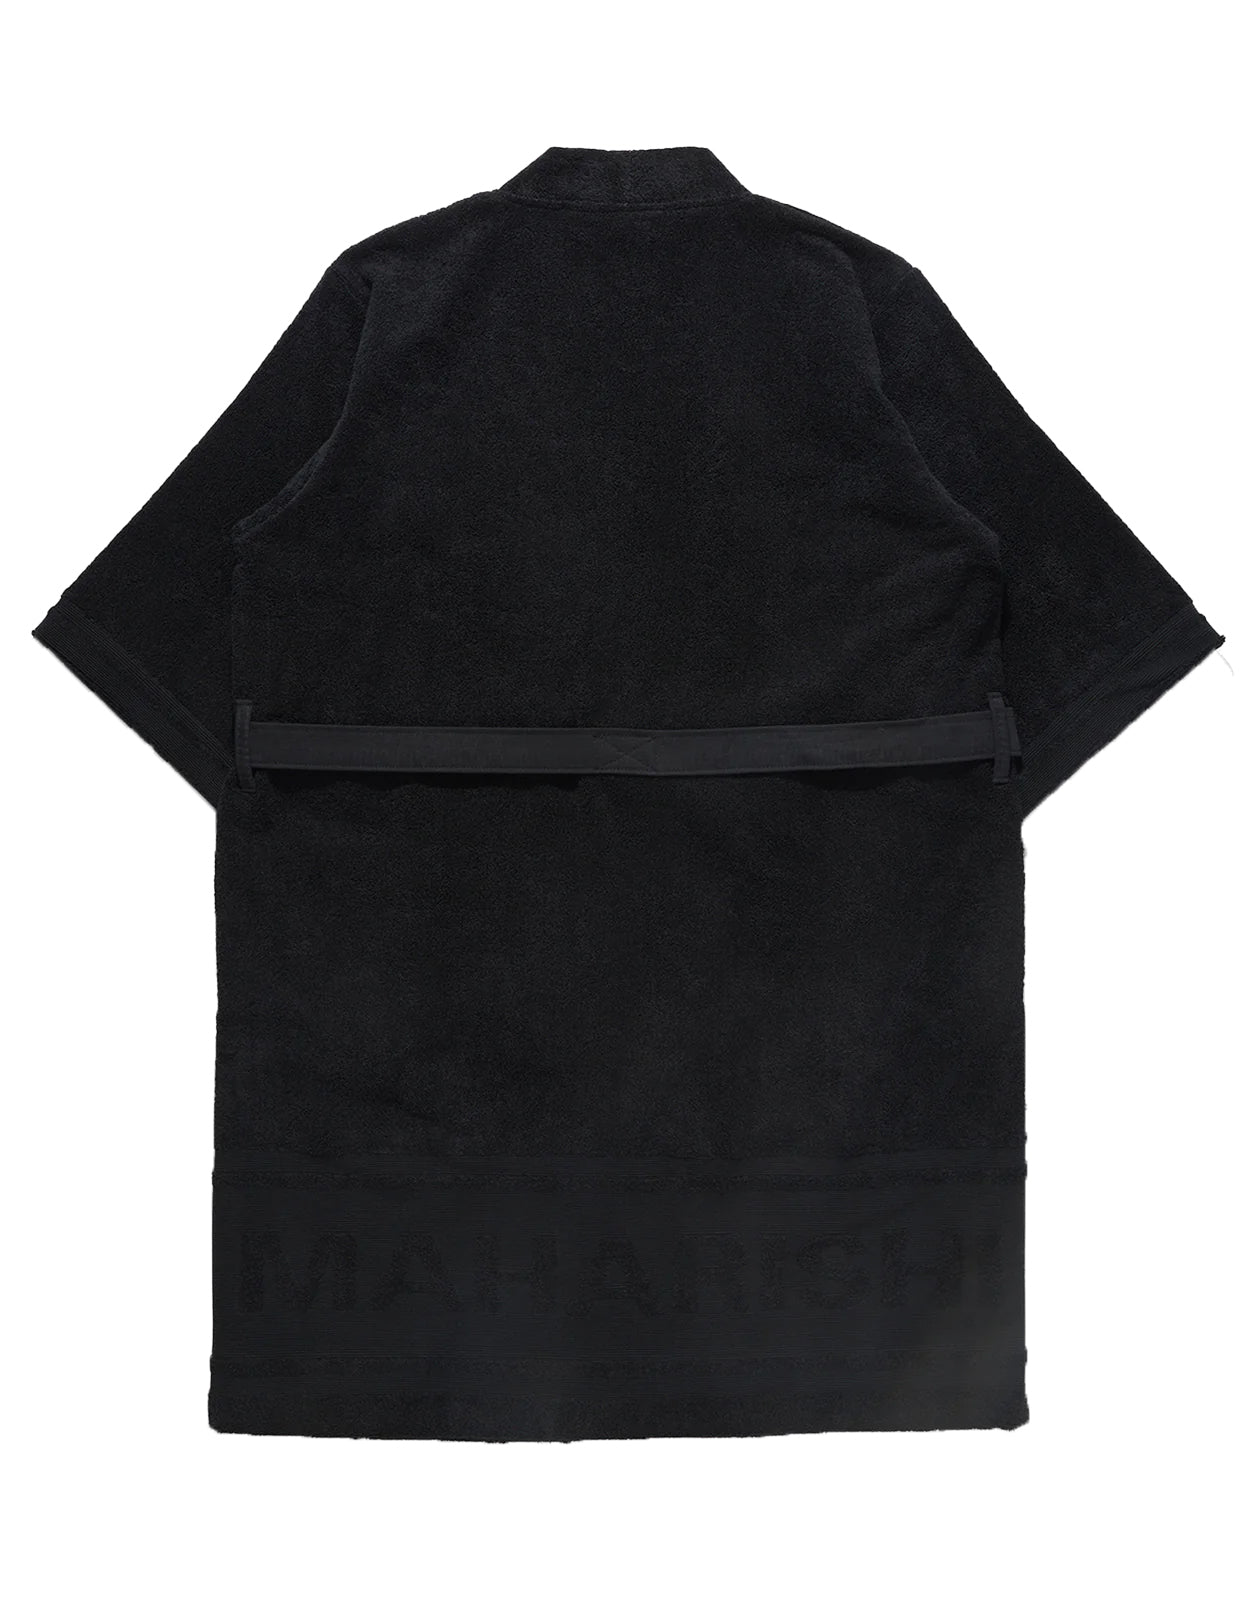 Maharishi Kimono Robe Black